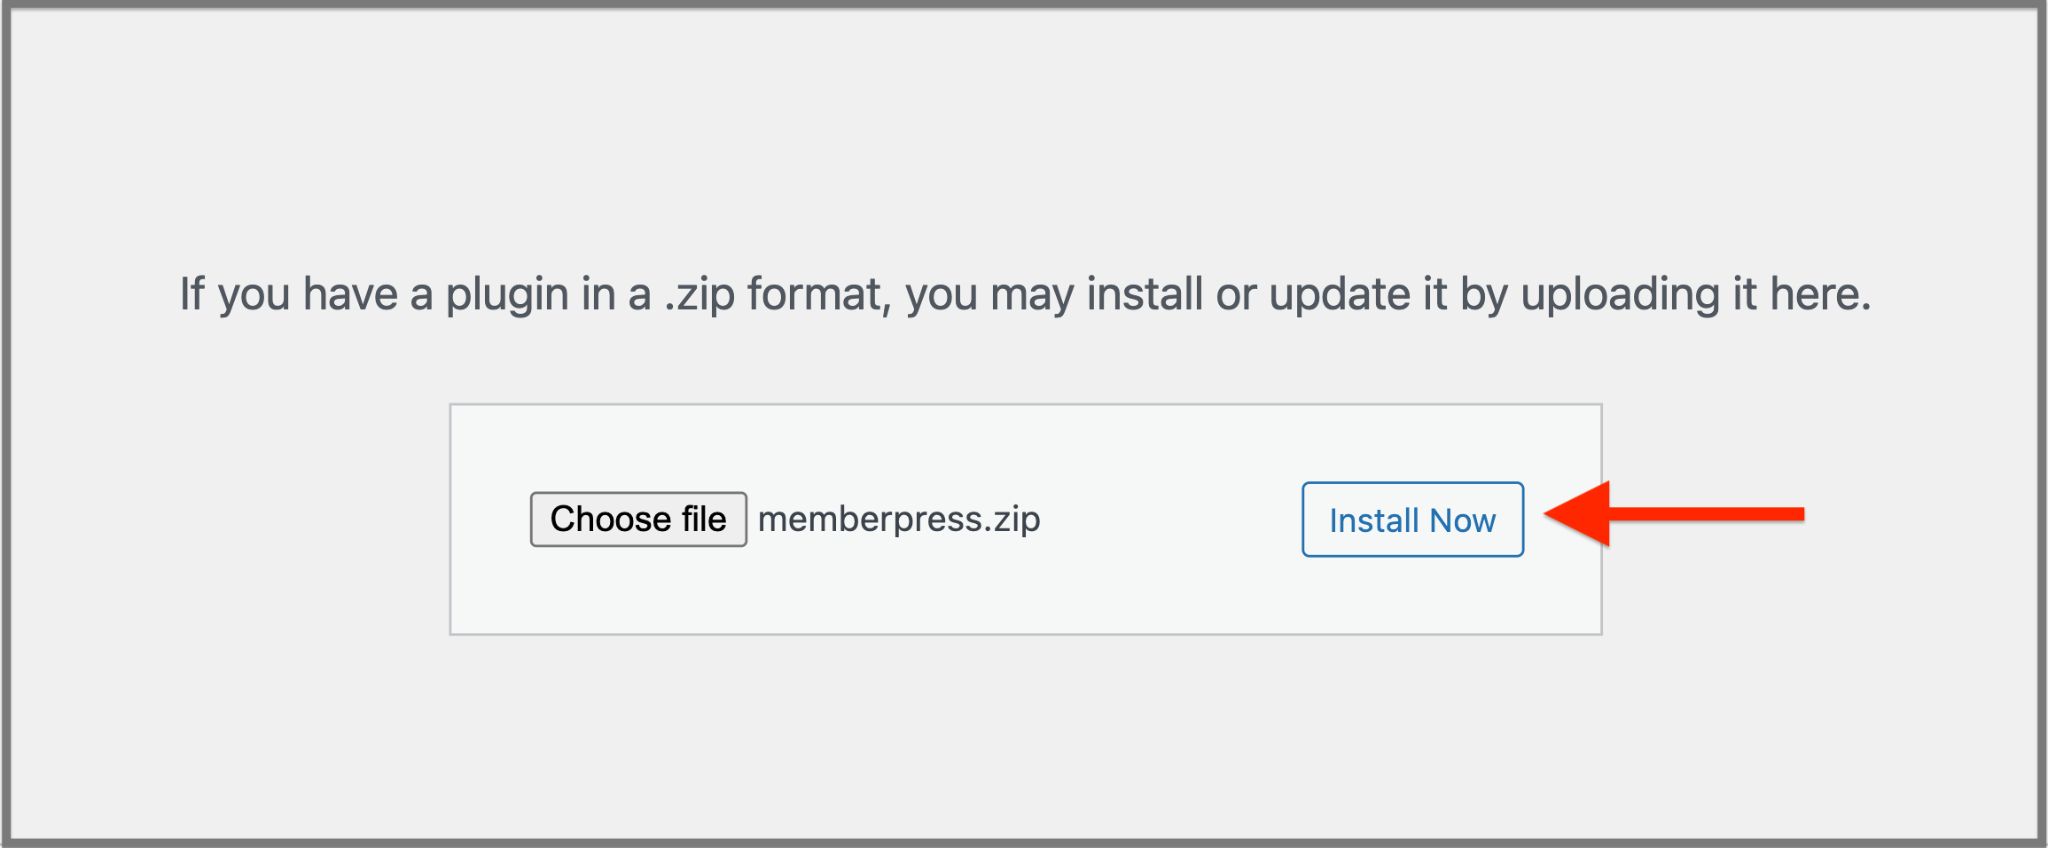 press install now button for memberpress